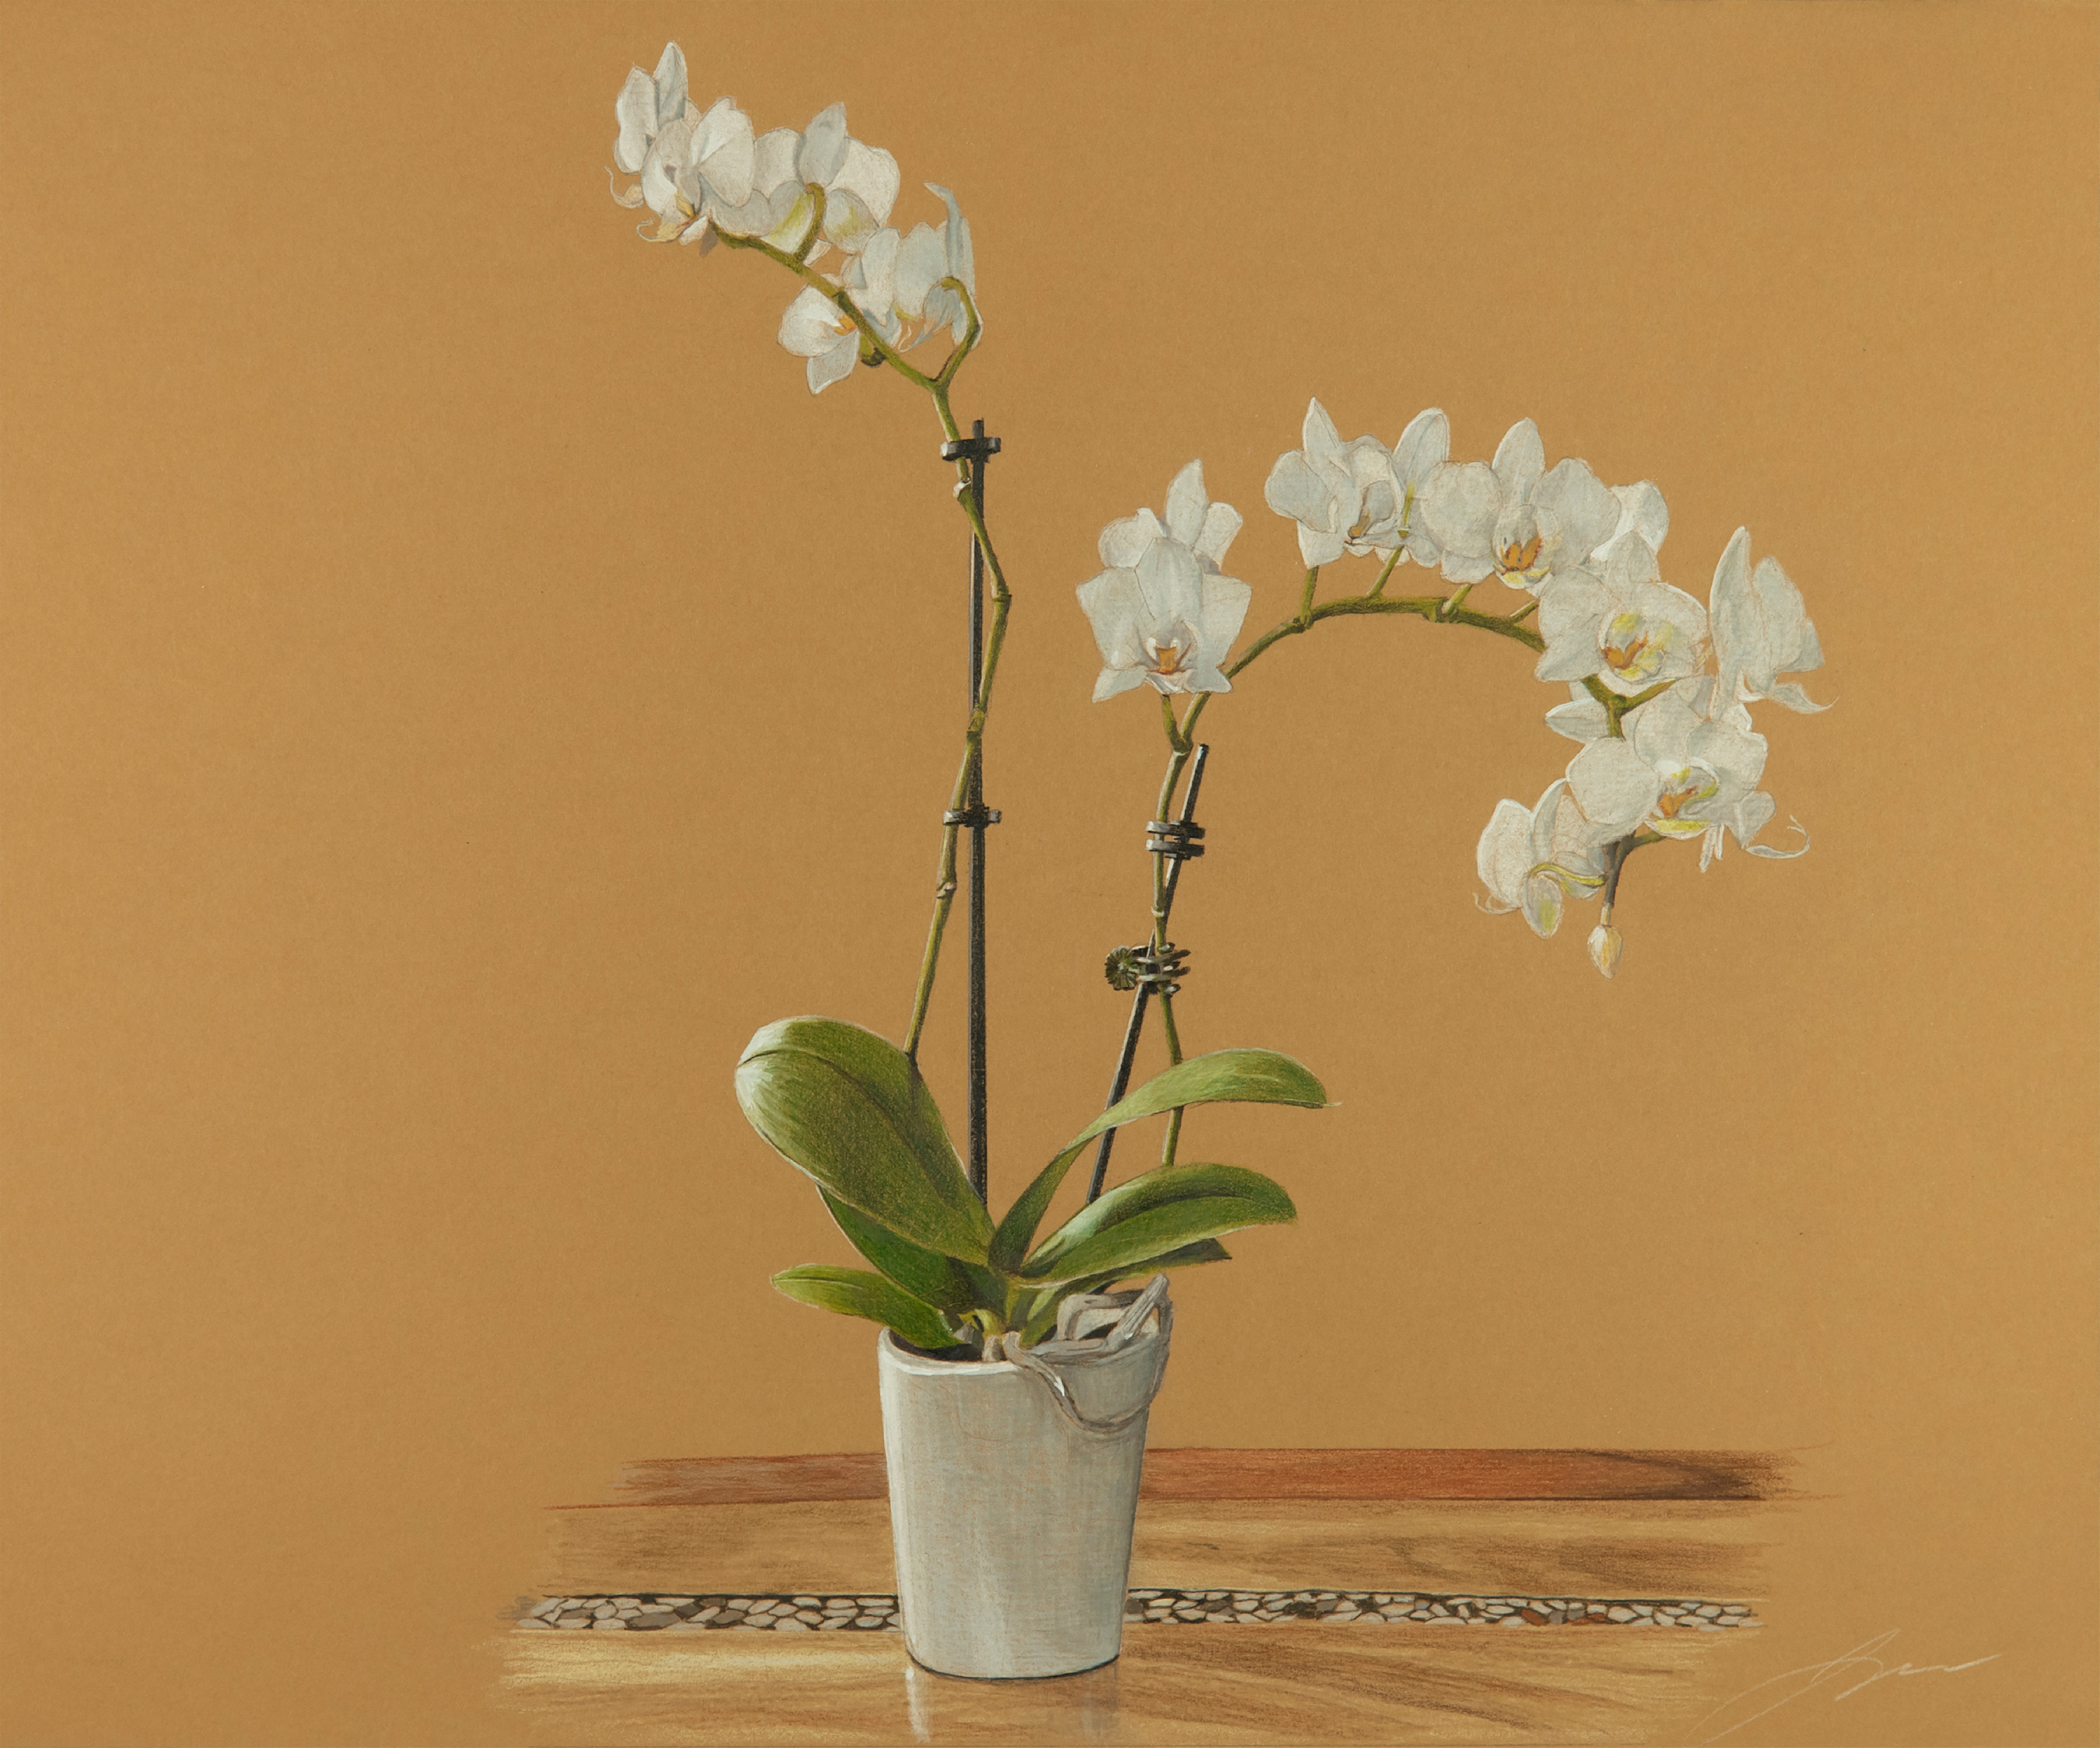 Jon strawbridge   whiteorchid t3aruu